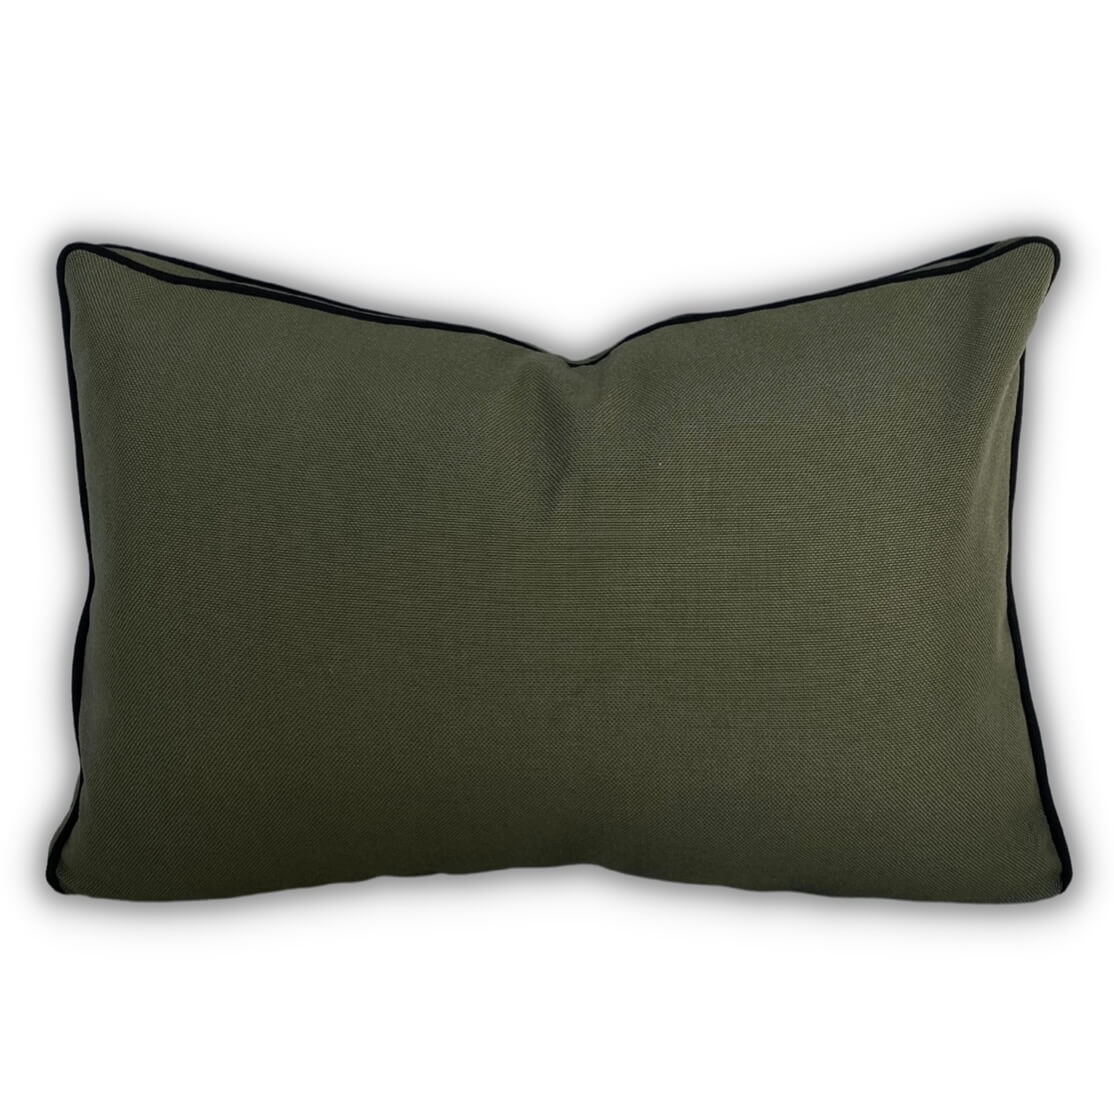 Khaki Green Outdoor Cushions.